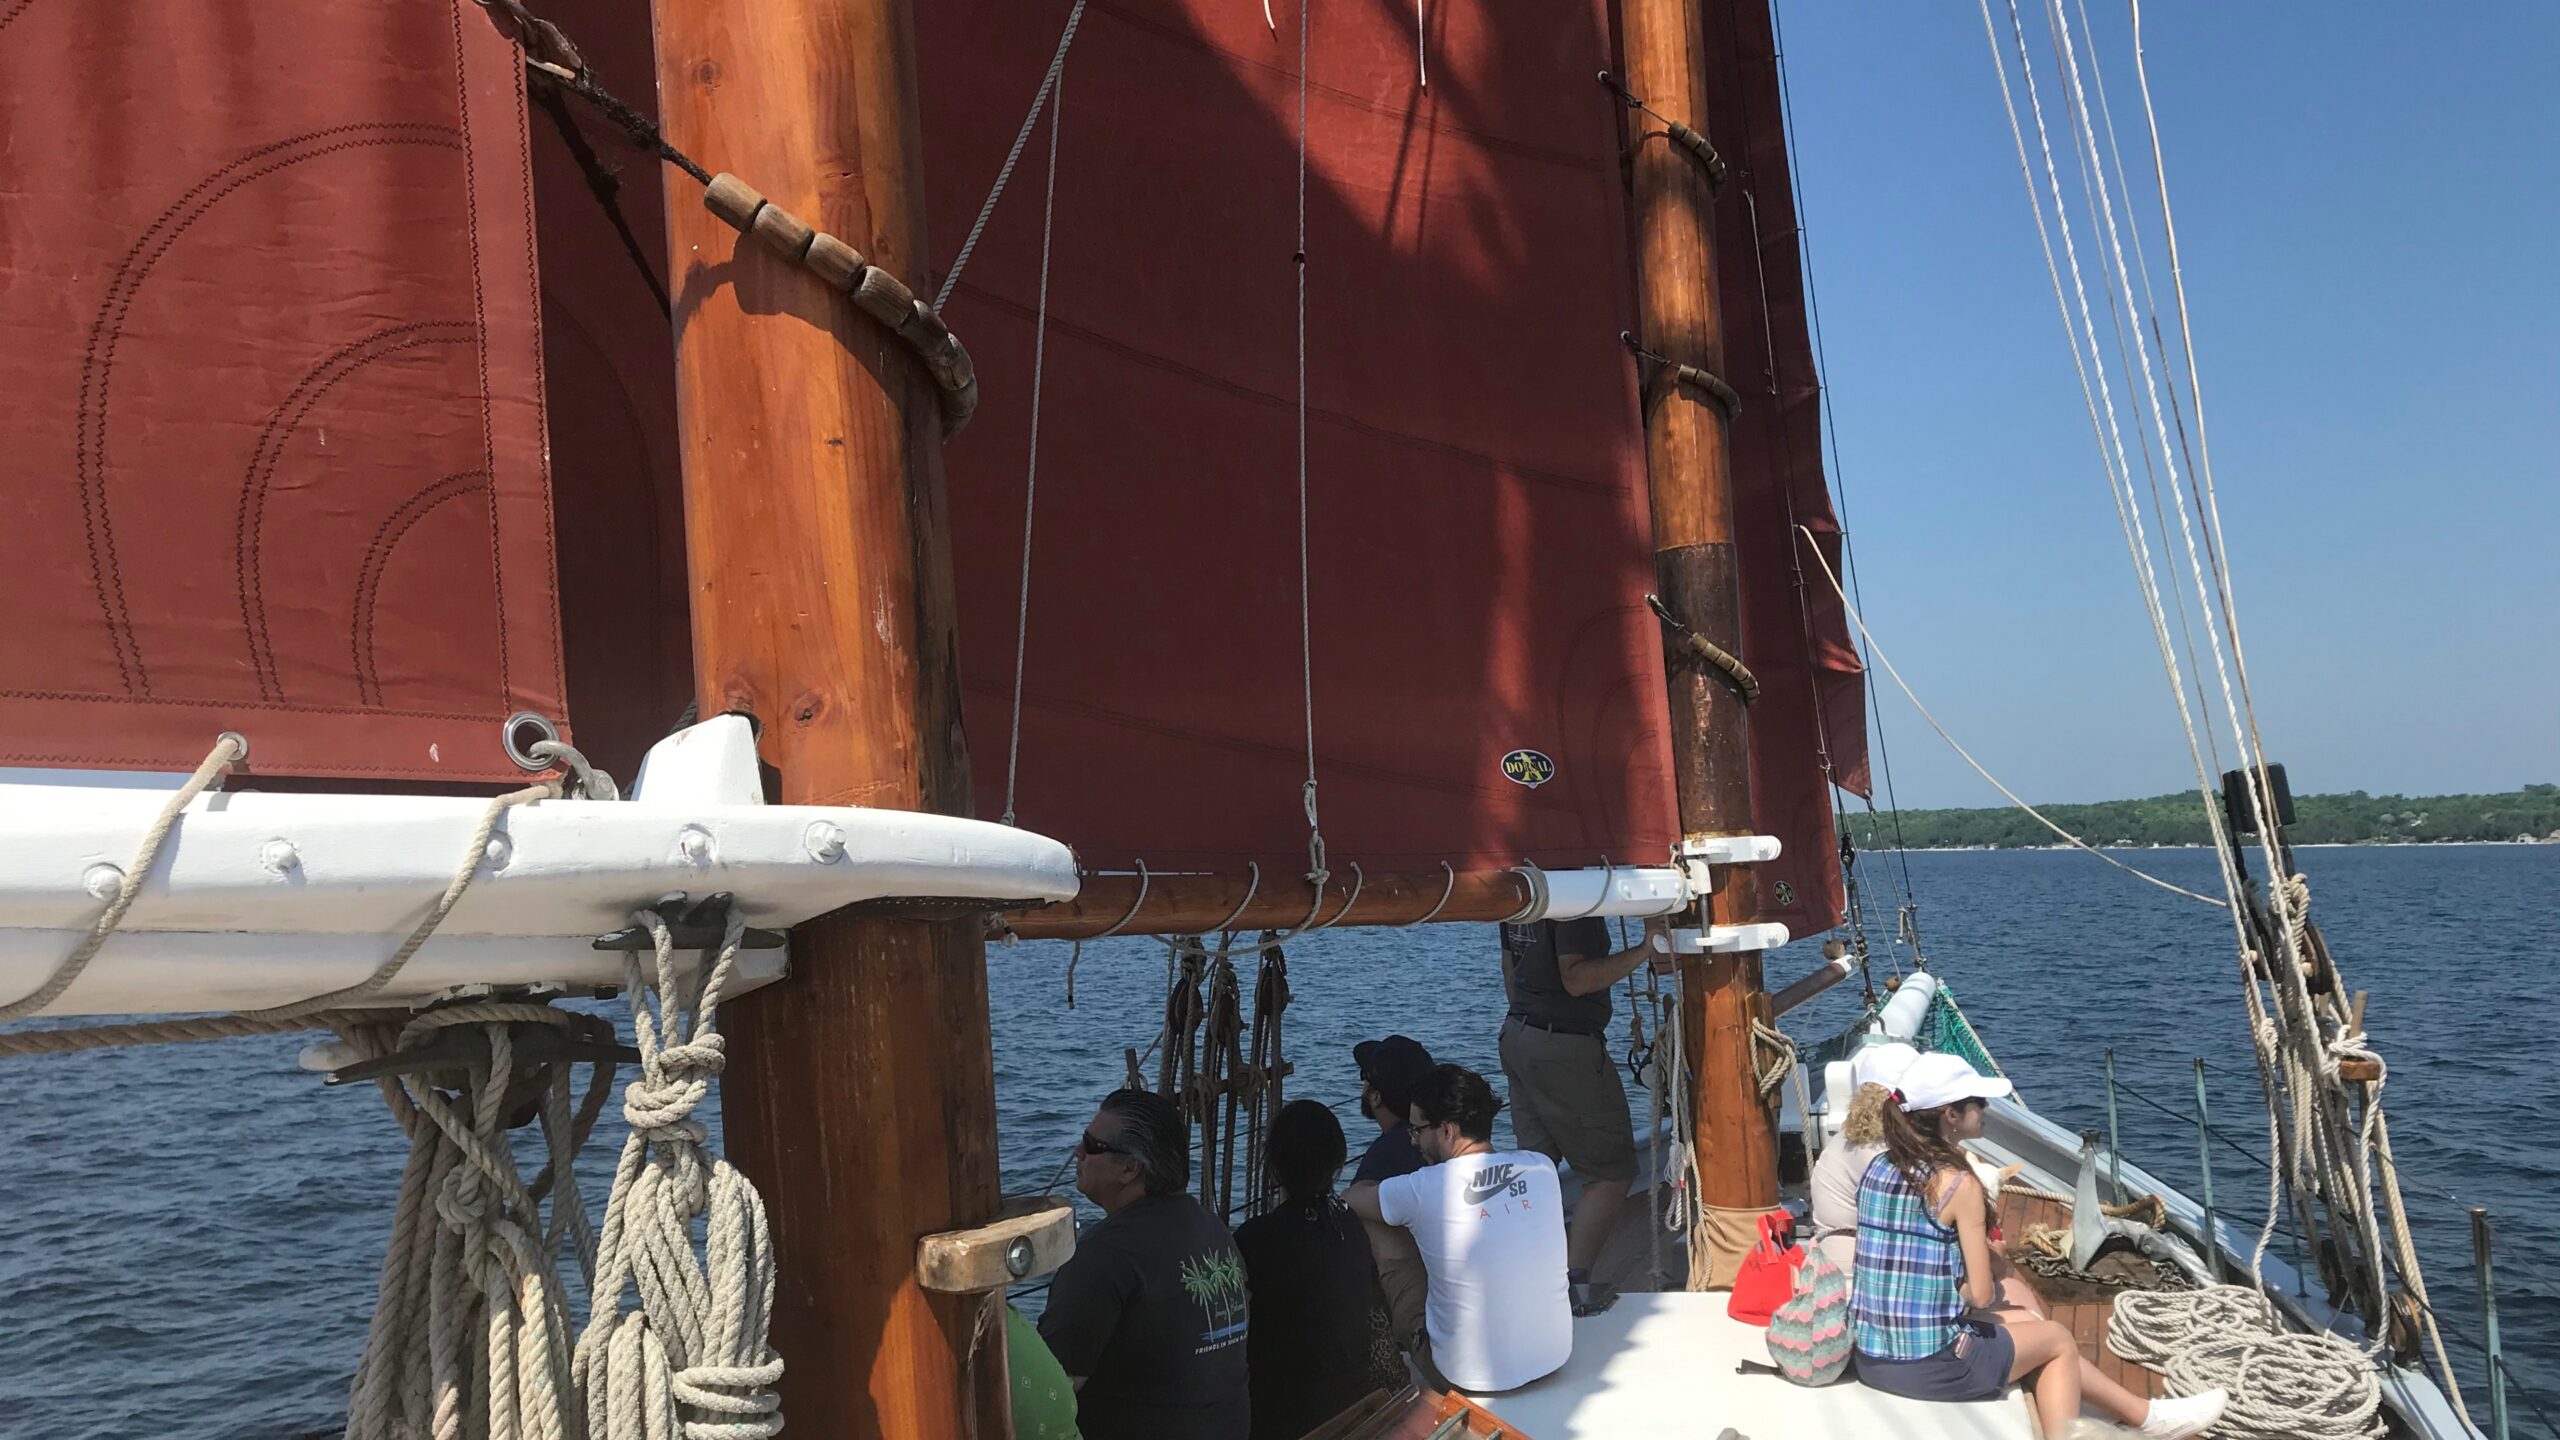 The Edith M. Becker sets sail daily from the Sister Bay Marina. Dan Plutchak/Door County Shore Report photo.